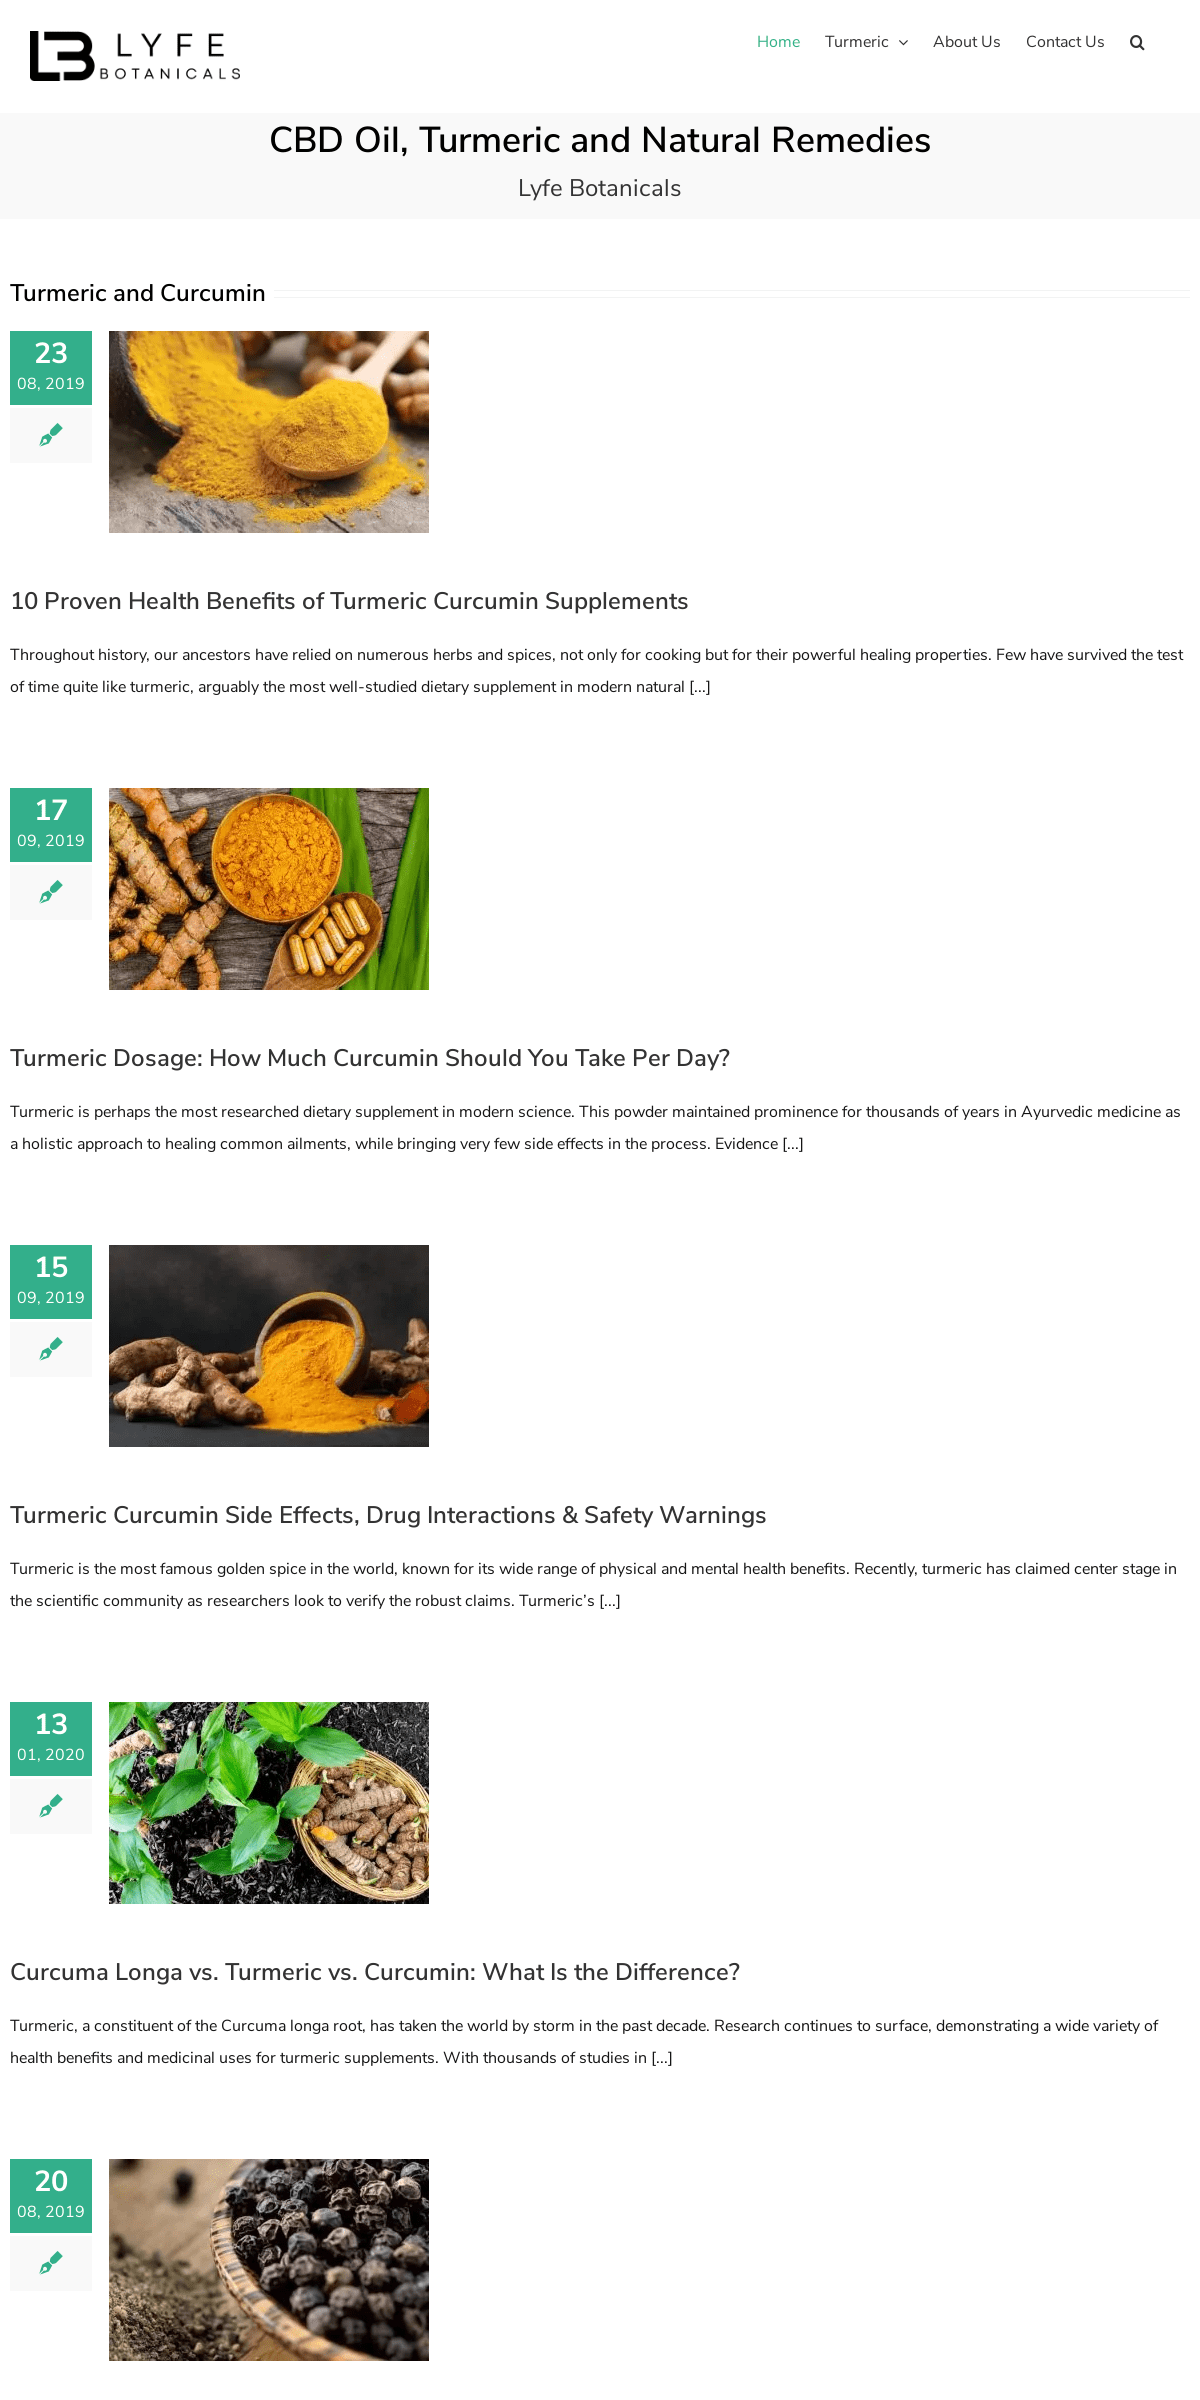 A complete backup of lyfebotanicals.com